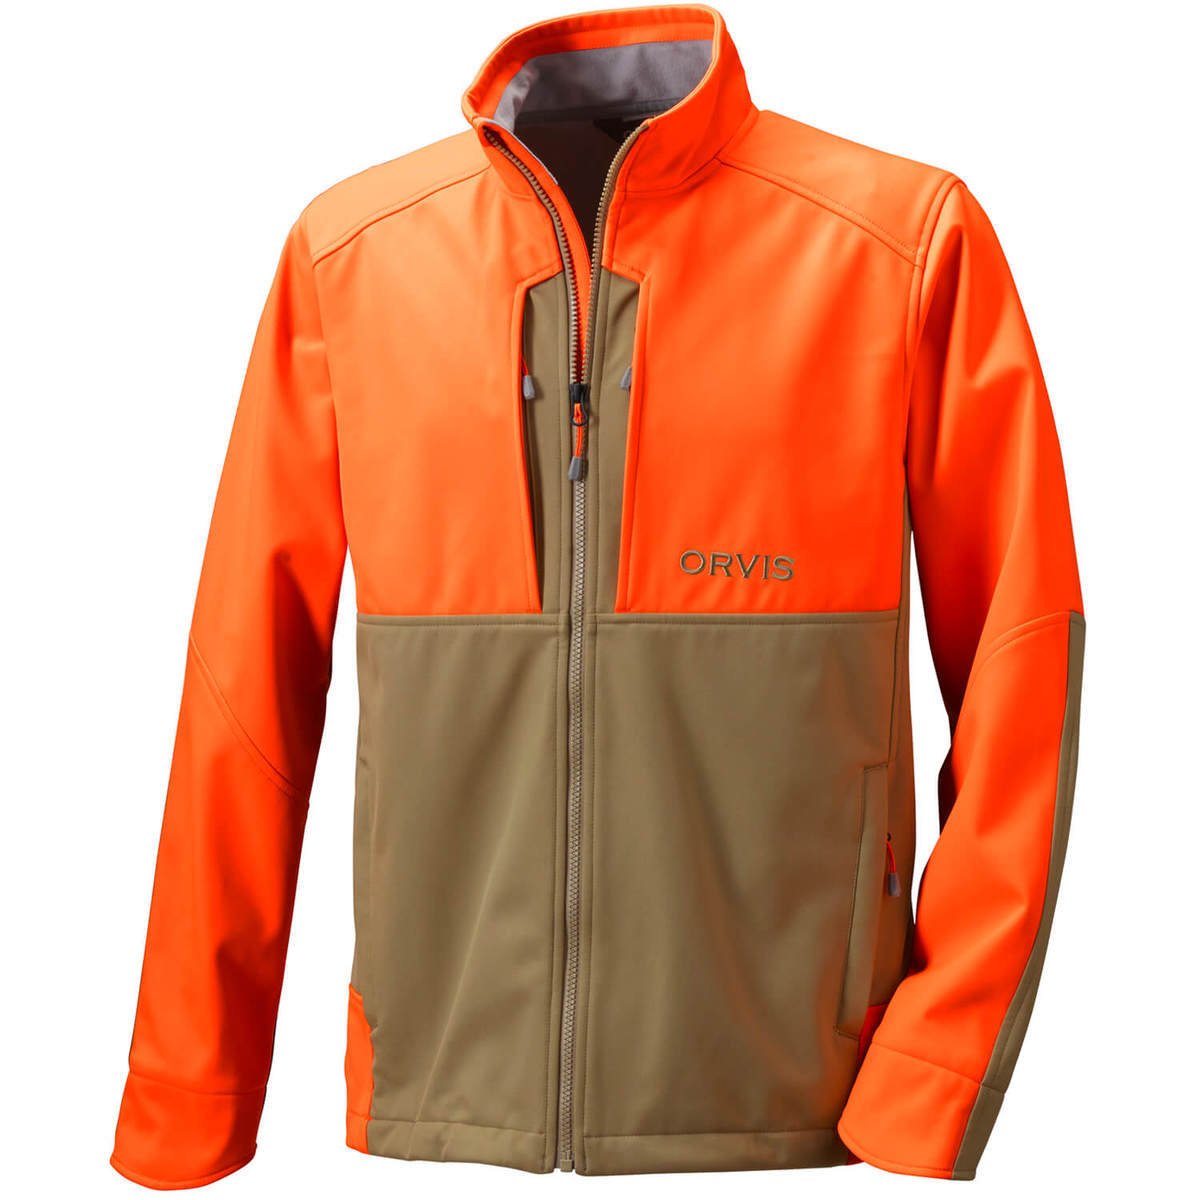 Upland jacket needed with LOTS of orange. | Shotgun Forum